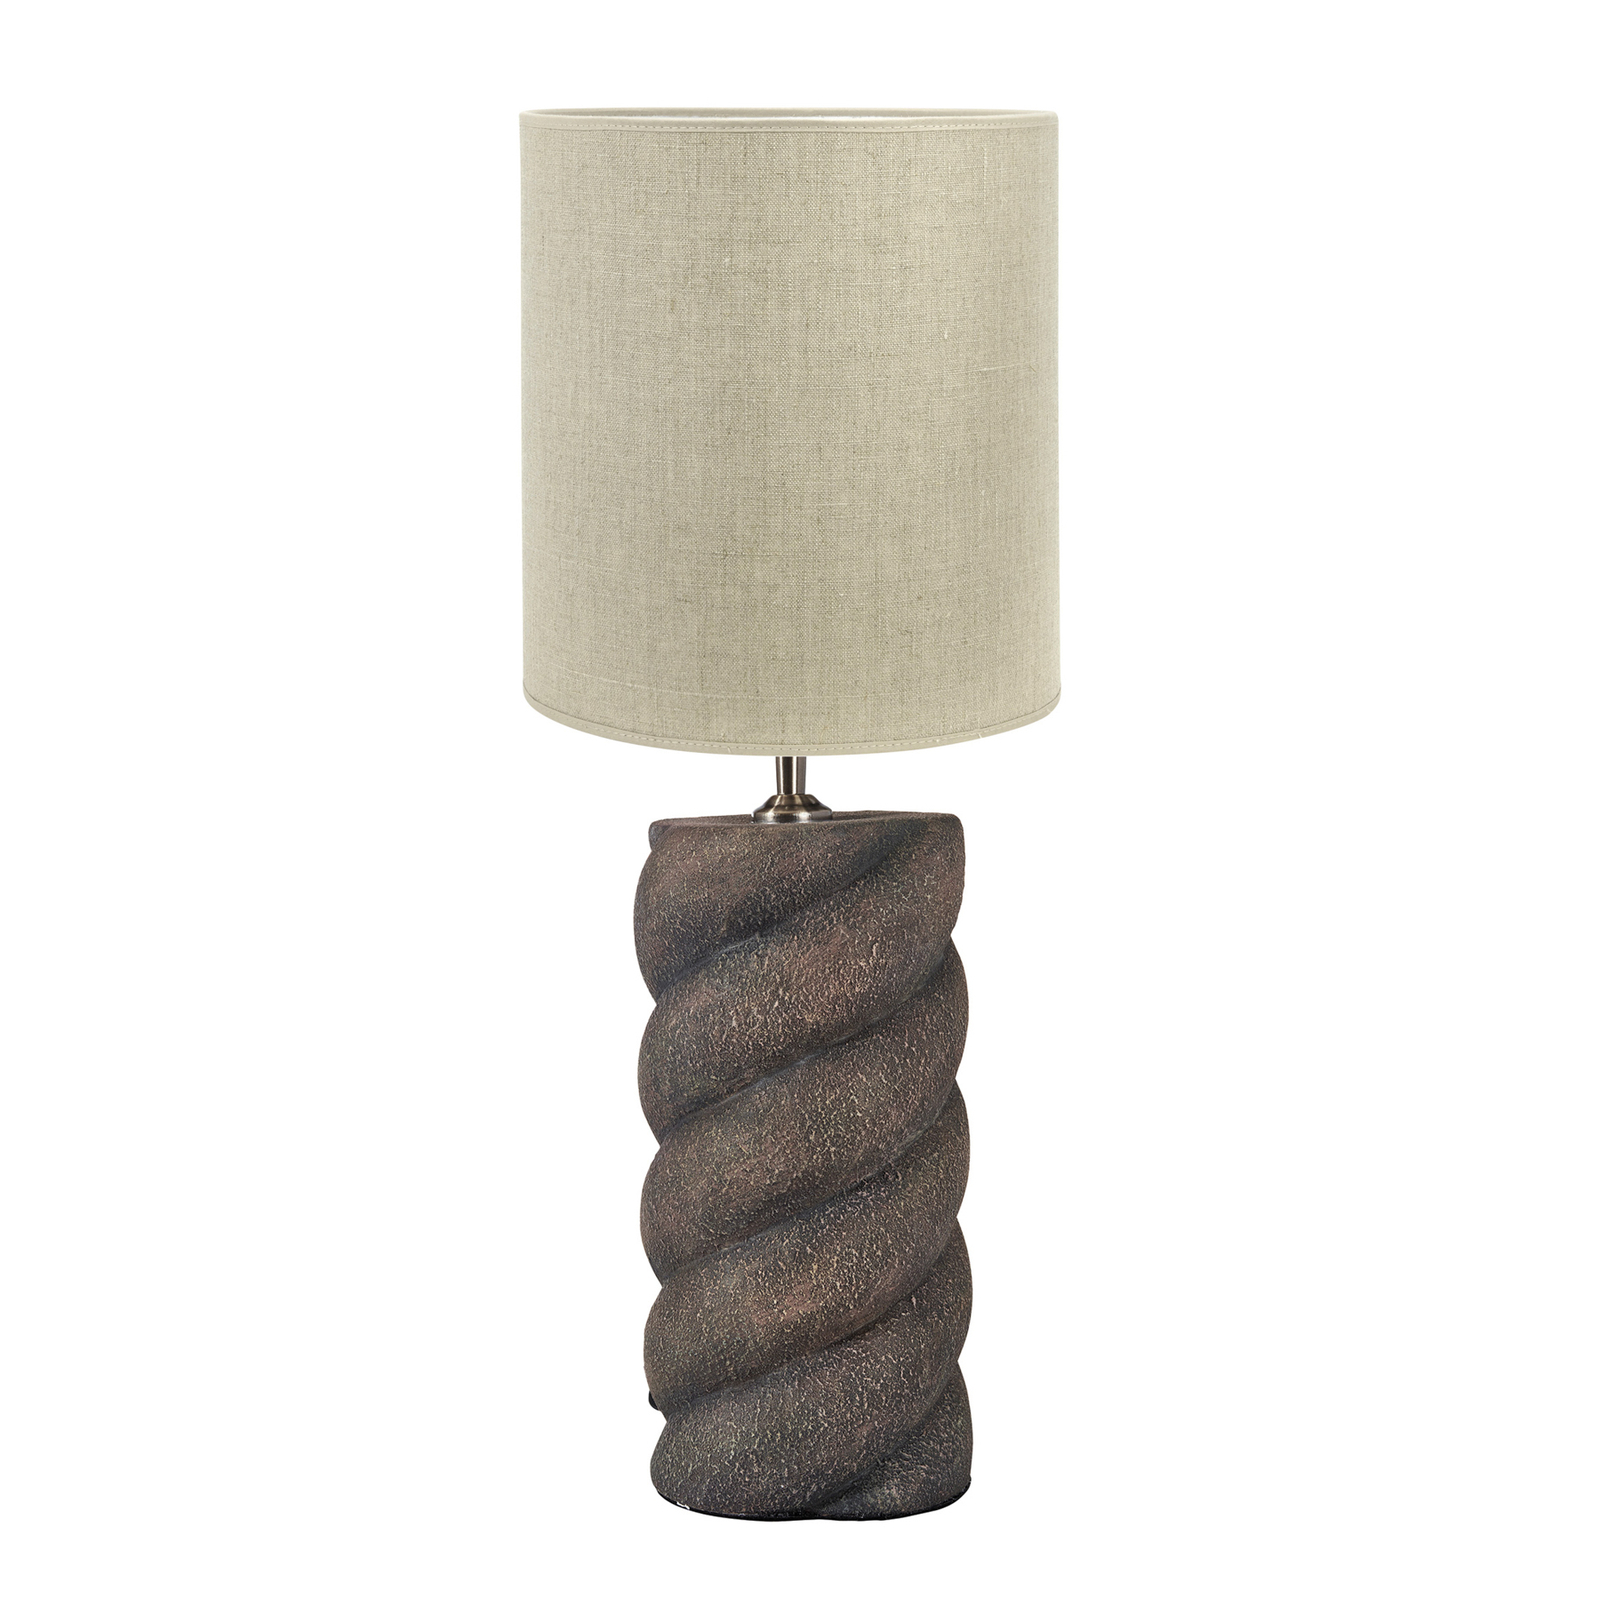 PR Home Spin table lamp Ø 30cm brown/natural linen